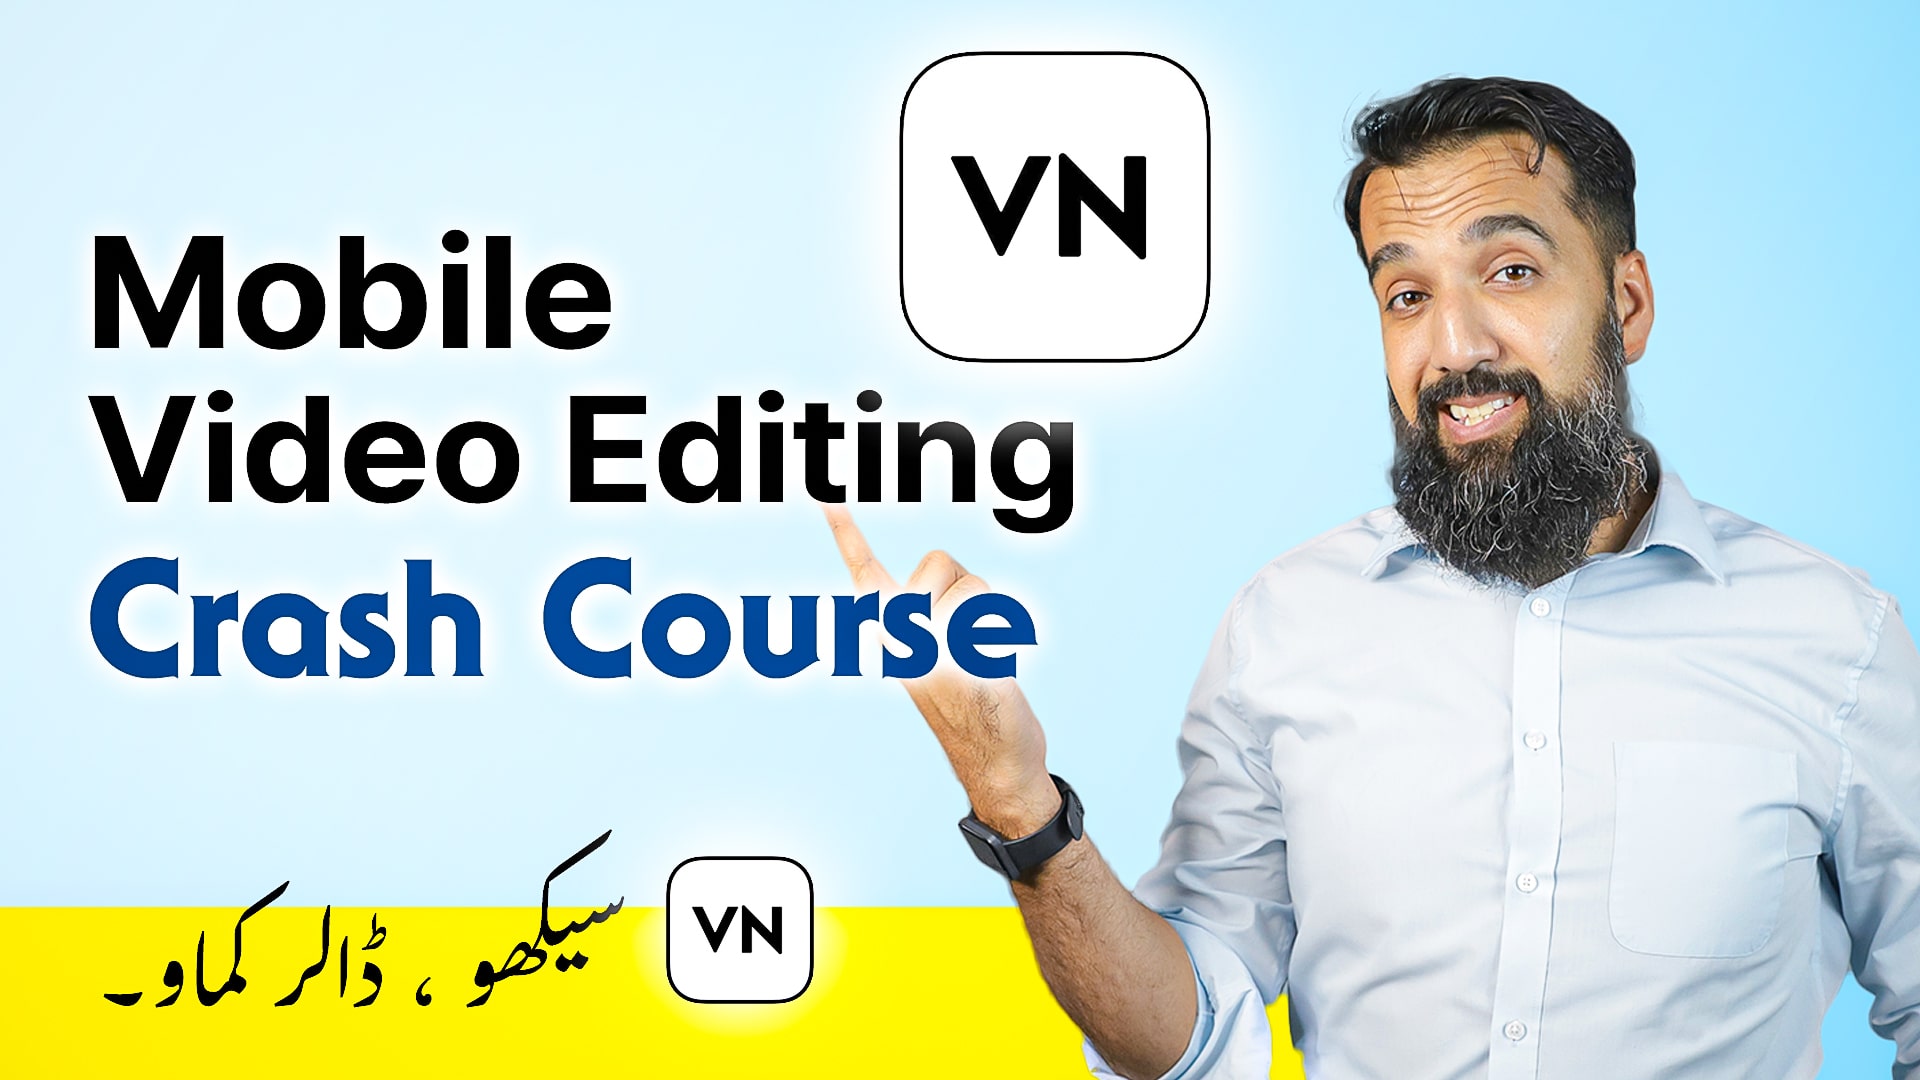  vn-editor-course-for-beginners-video-editors-by-azadchaiwala-64f85b4f394d1736095355.jpg 